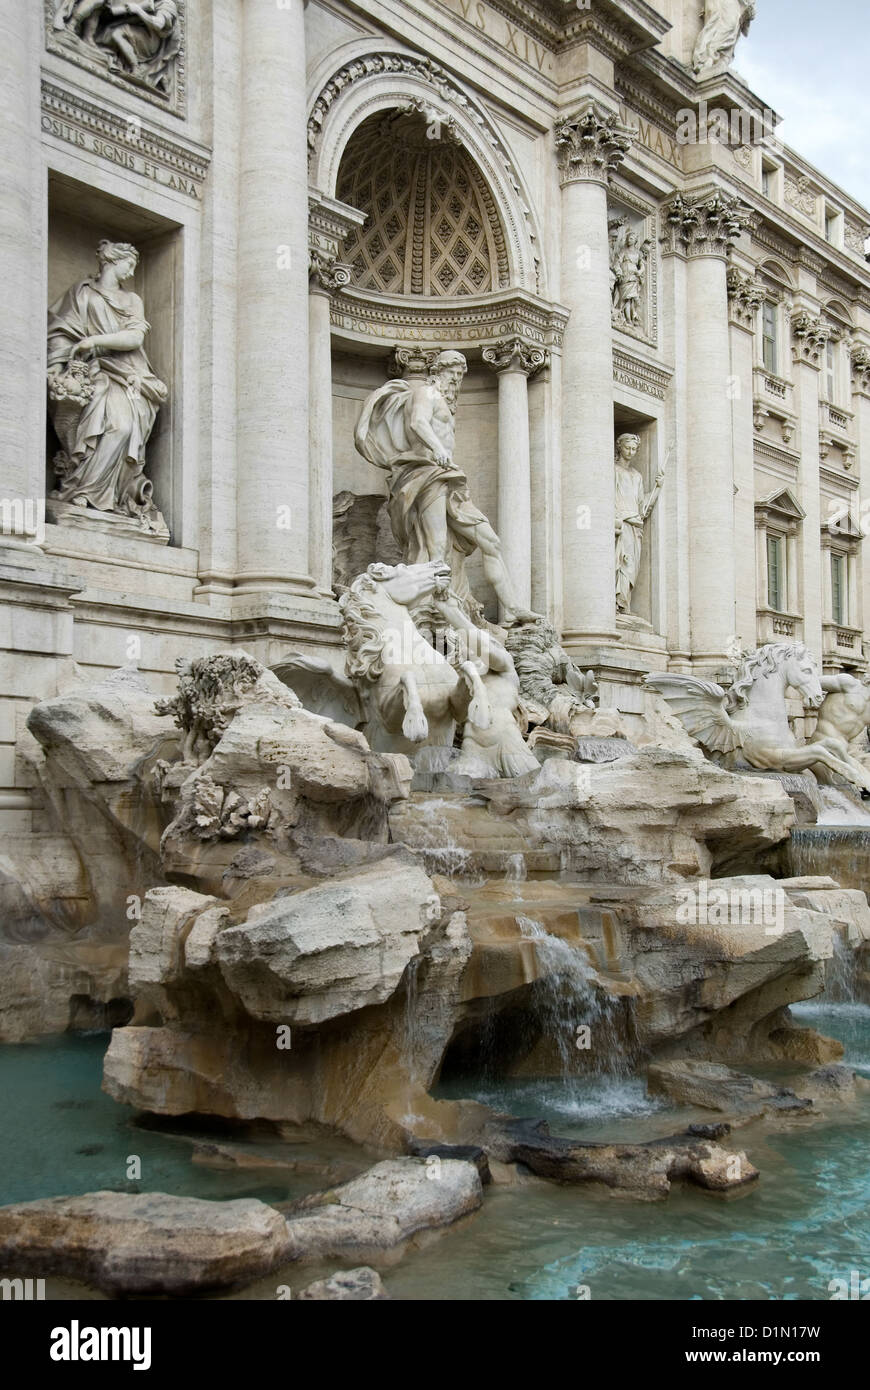 The Trevi Fountain - Rome Stock Photo